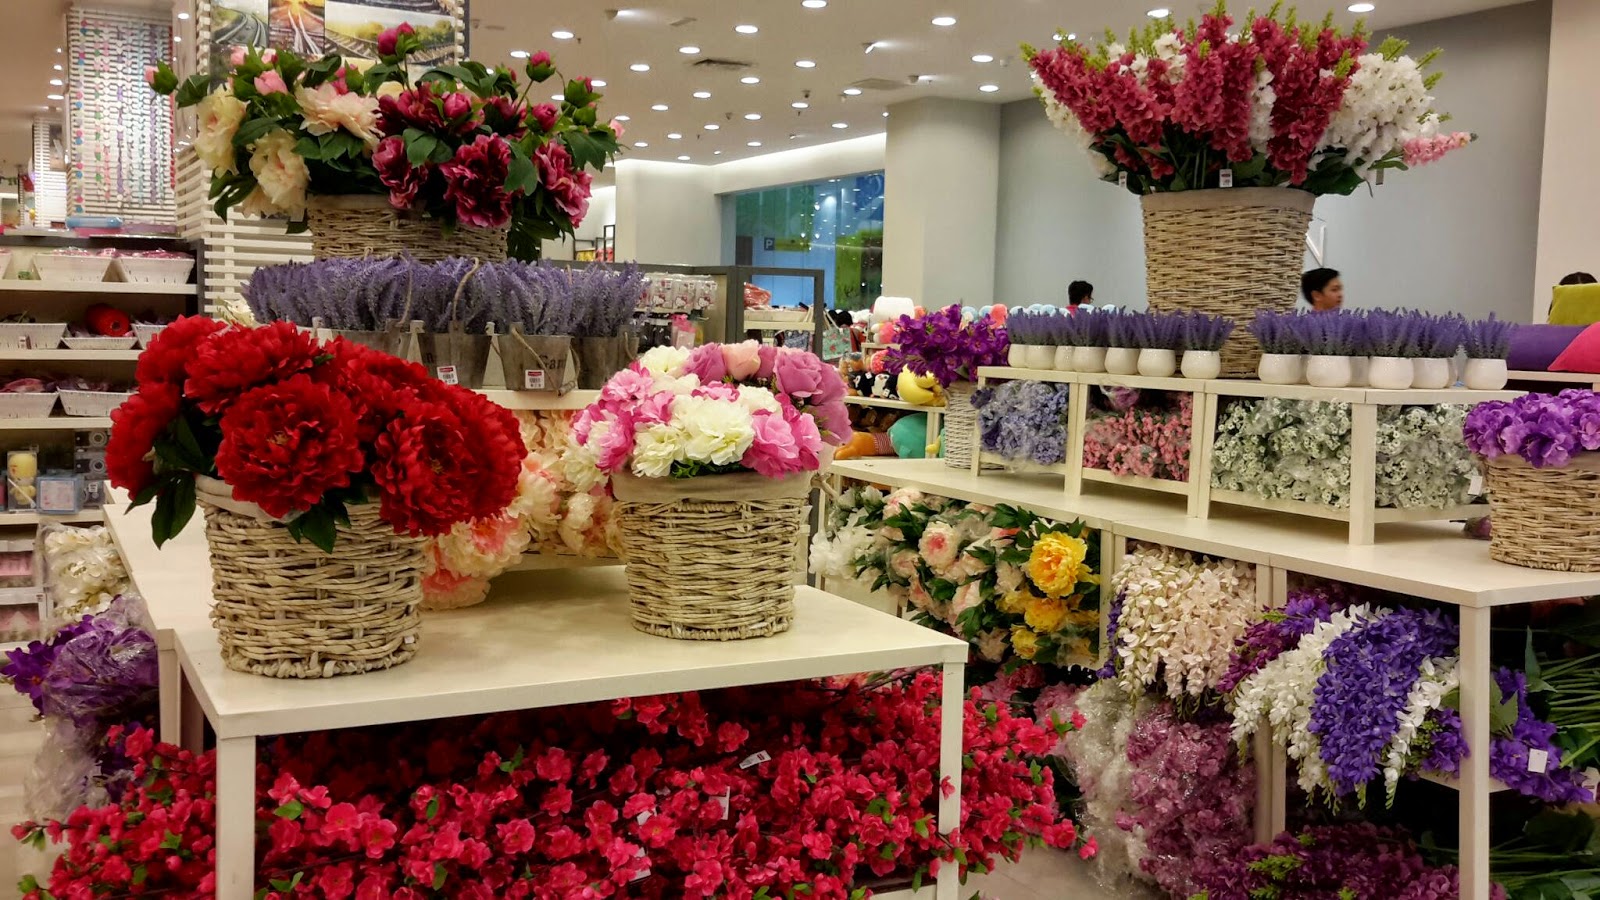 kaison malaysia wallpaper,floristry,flower arranging,flower,floral design,cut flowers